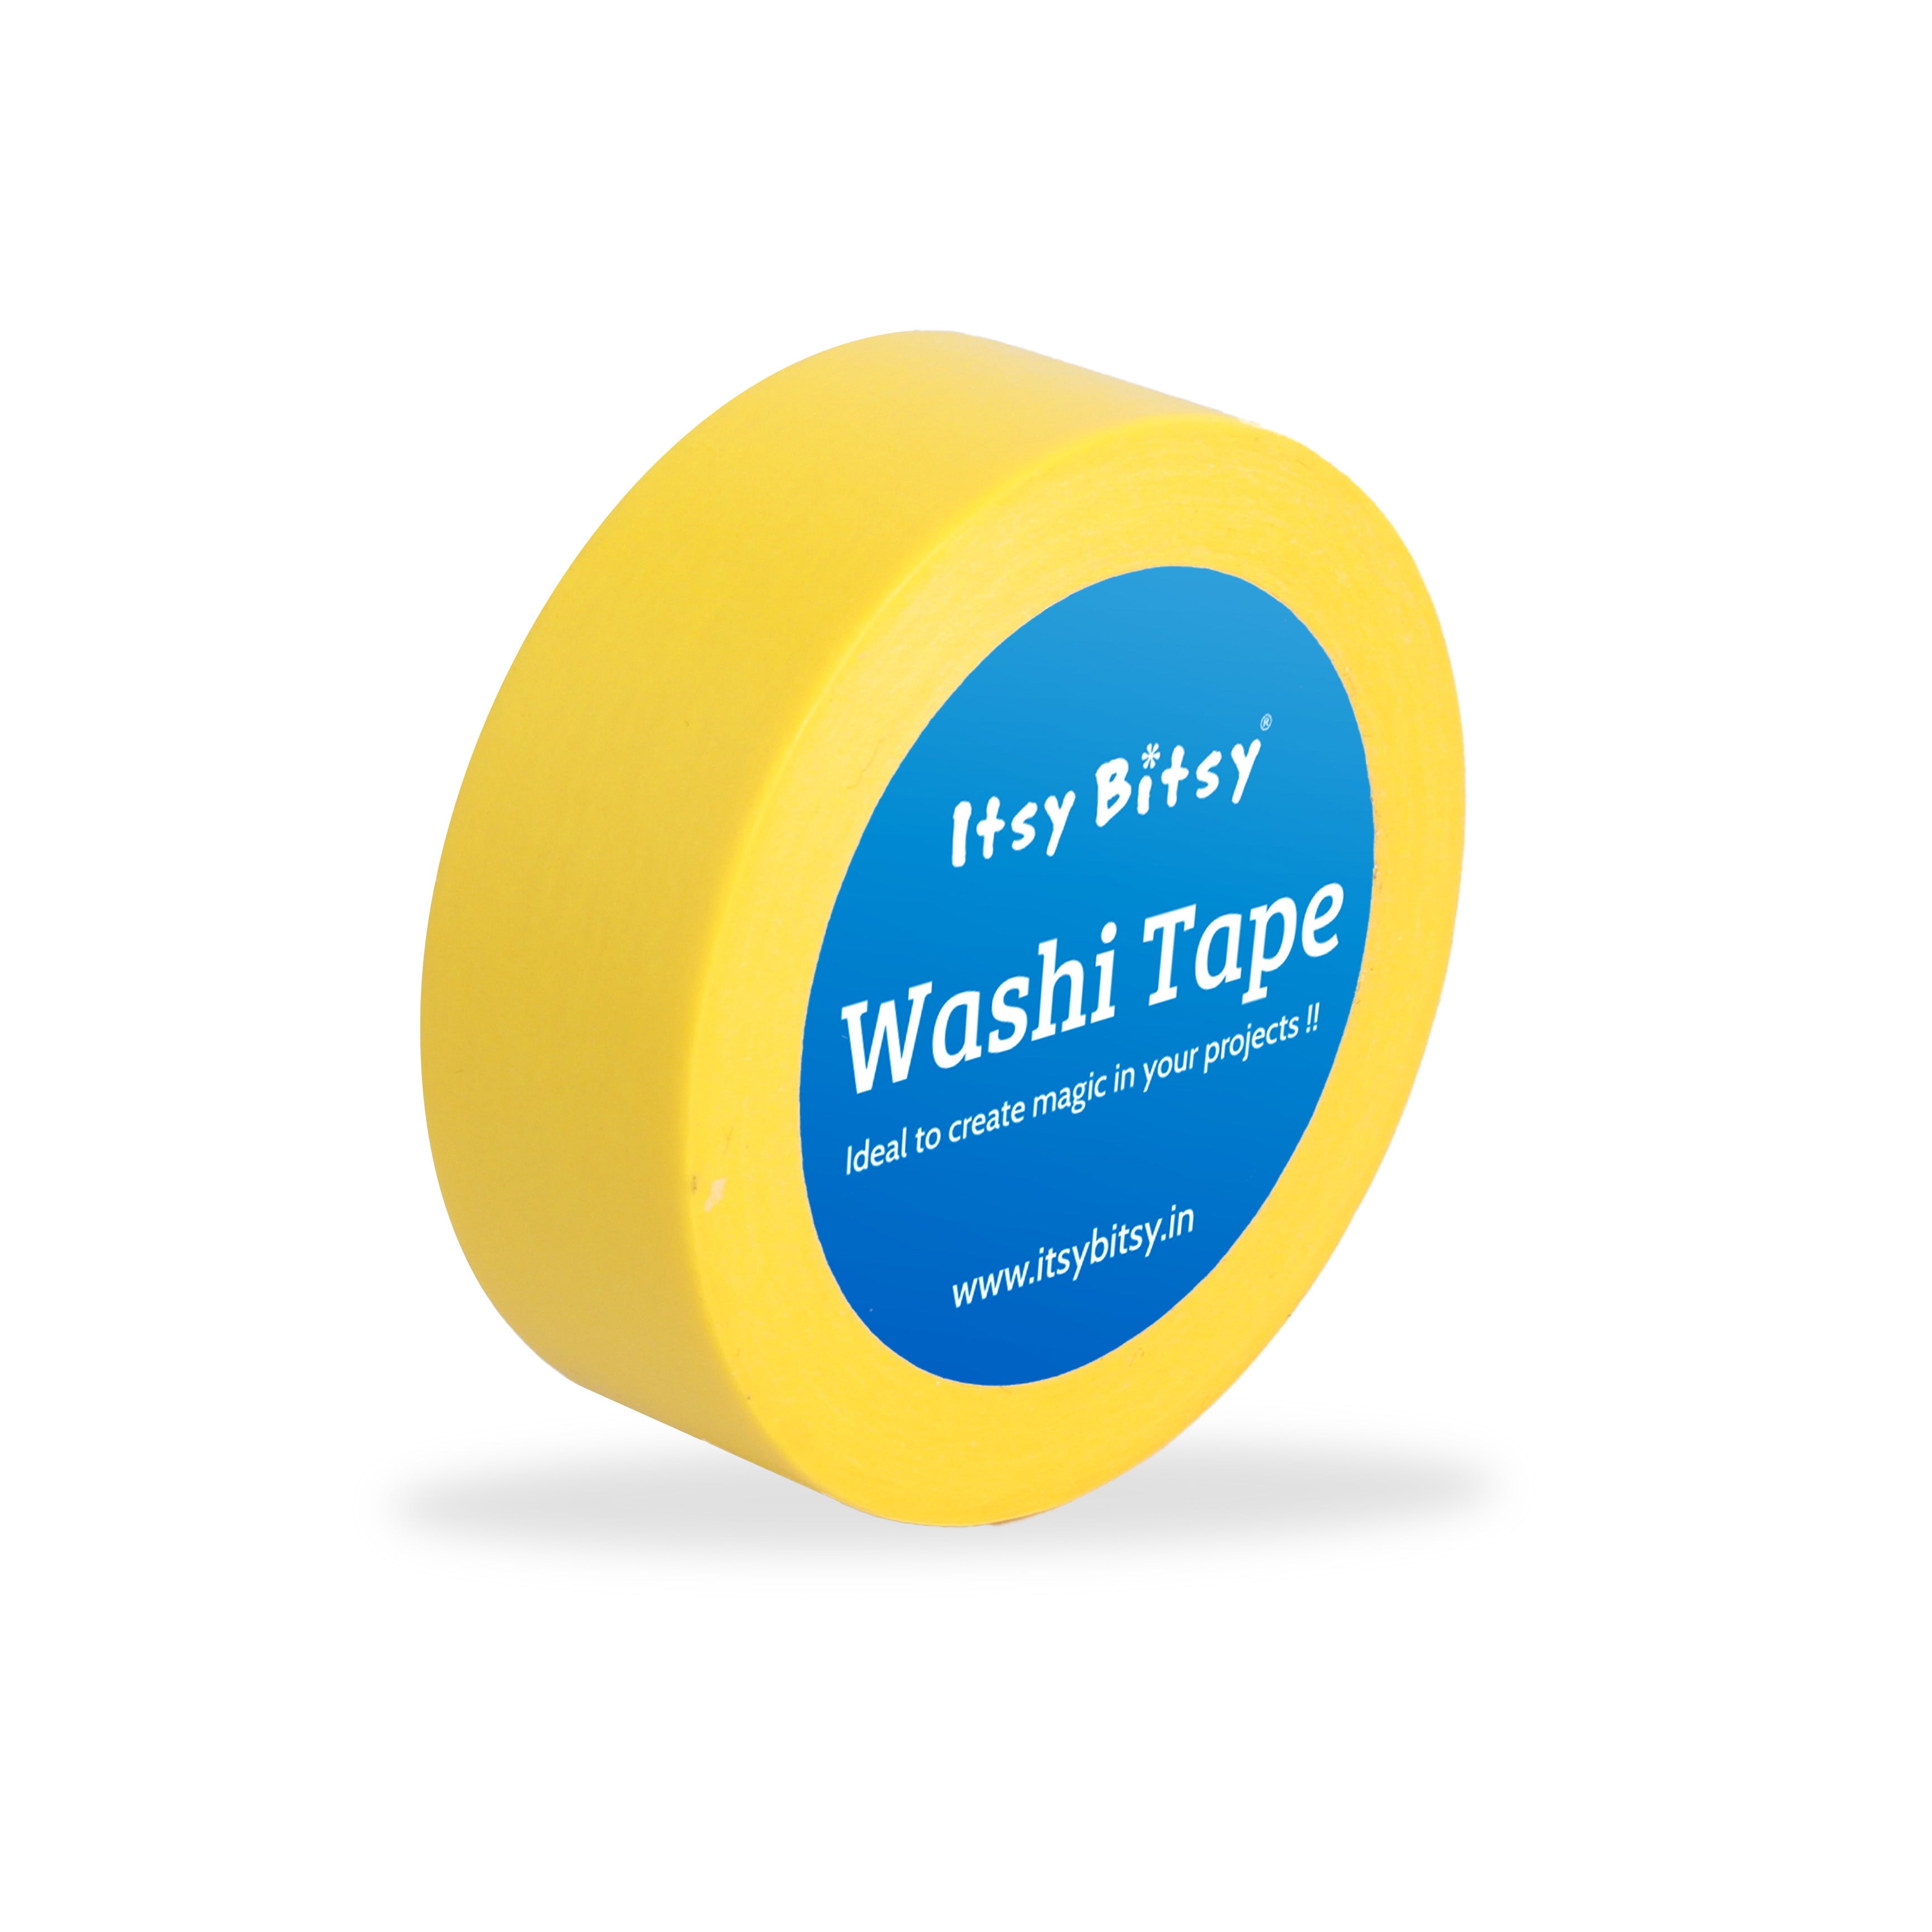 Washi Tape - Sunny Yellow, 15mmx10m 1pc